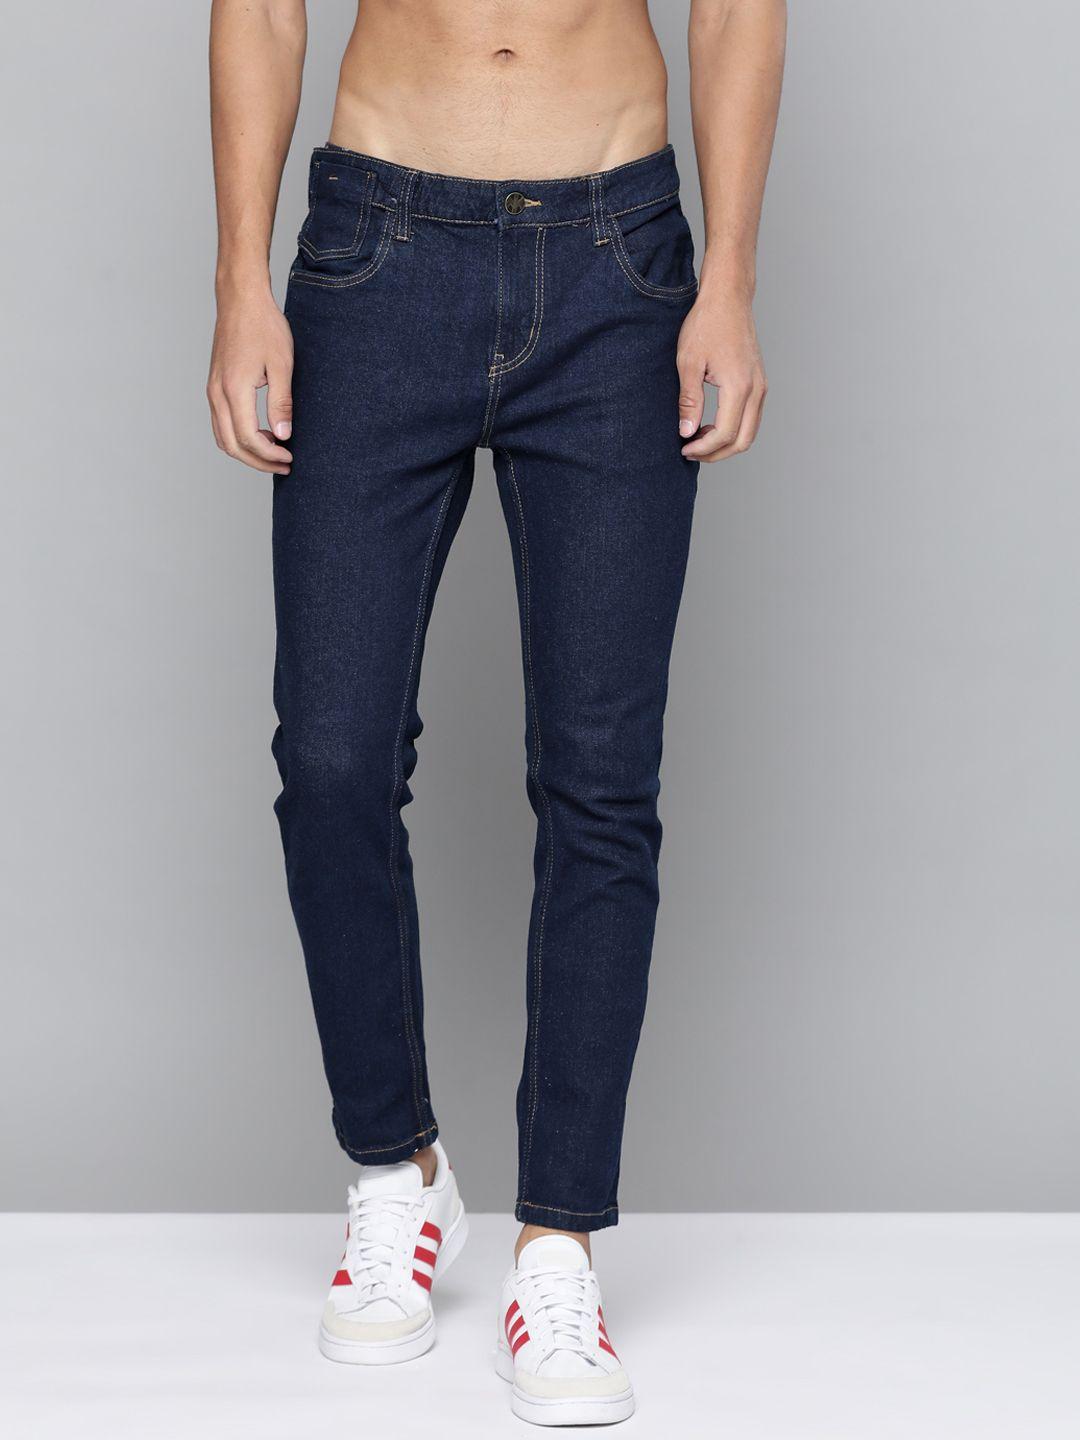 kook n keech men navy blue super skinny fit low-rise stretchable jeans